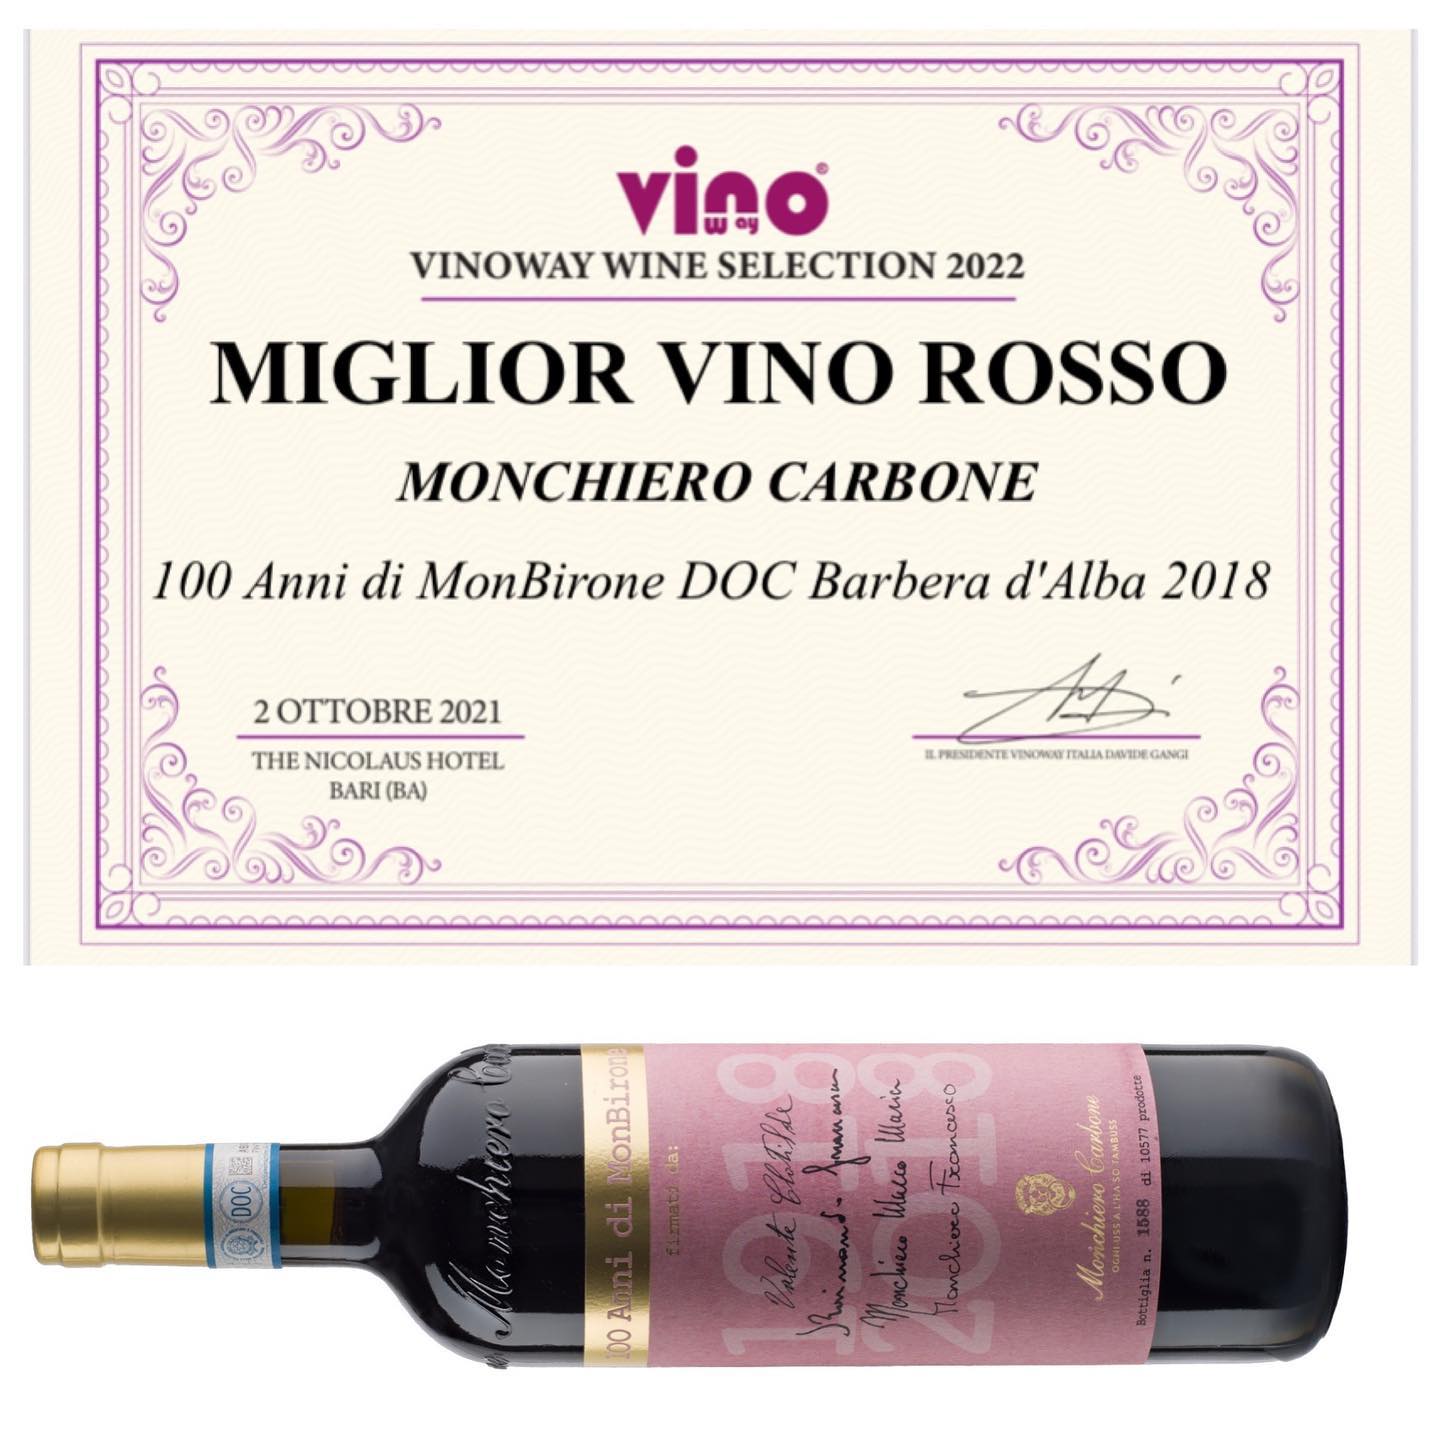 MIGLIOR VINO ROSSO DELL’ANNO : 💯 Anni Barbera d’Alba MonBirone 2018  per @vinoway Wine Selection ! 🎉
-
-
-
BEST RED WINE OF THE YEAR: Barbera d’Alba MonBirone 2018 💯Centenary Edition! By @vinoway Wine Selection ! 🎉 

#barberadalba #roero #monchierocarbone #monchierocarbonewinery #monbirone100anni #monbironebarberadalba #vinowaywineselection #bestredwine #winepassion #winelover #bestwine #migliorvinorosso